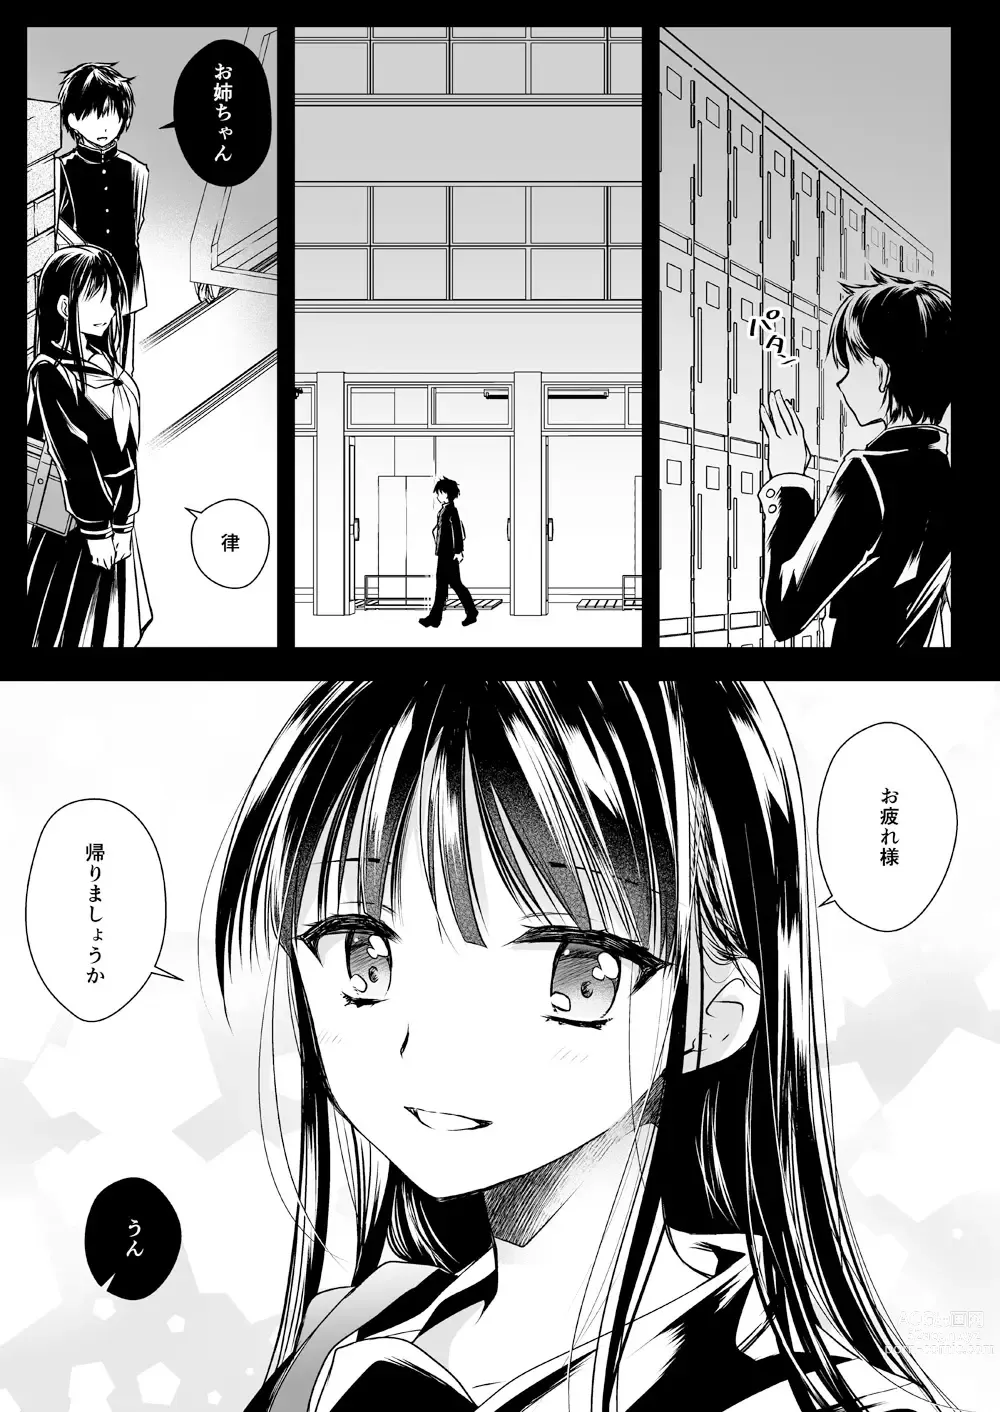 Page 2 of manga Kyou izon Kyoudai